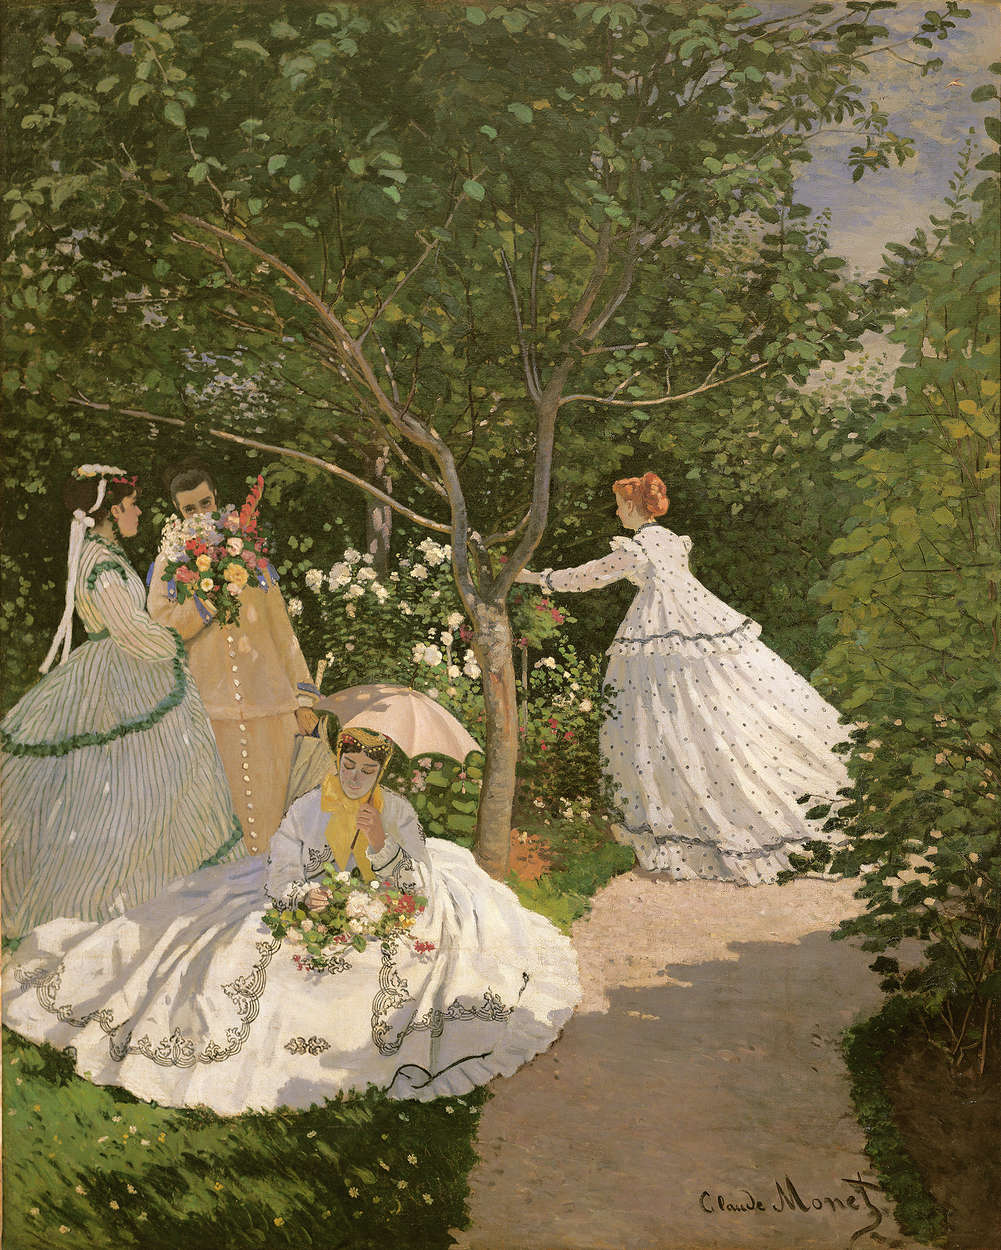             Photo wallpaper "Women in the garden" by Claude Monet
        